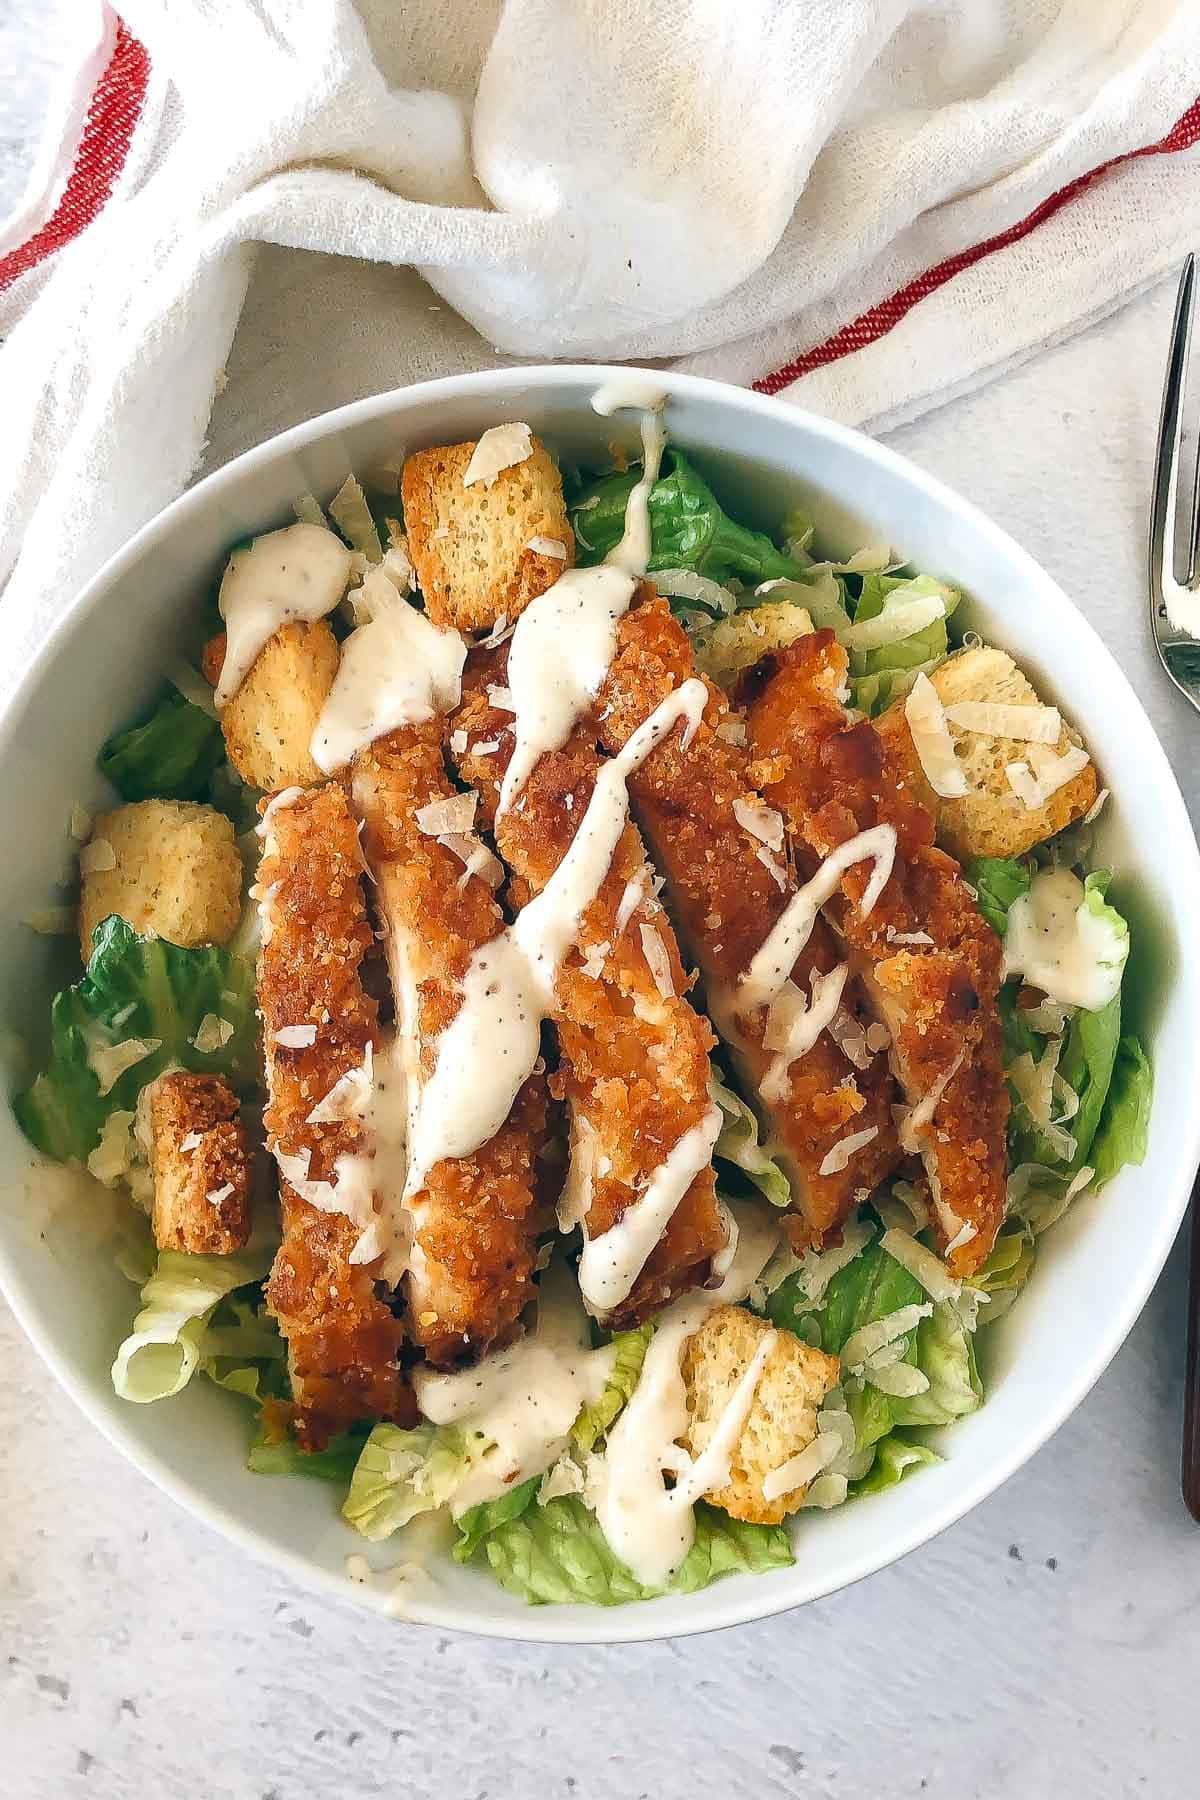 Breaded chicken on top of a Caesar salad kit.